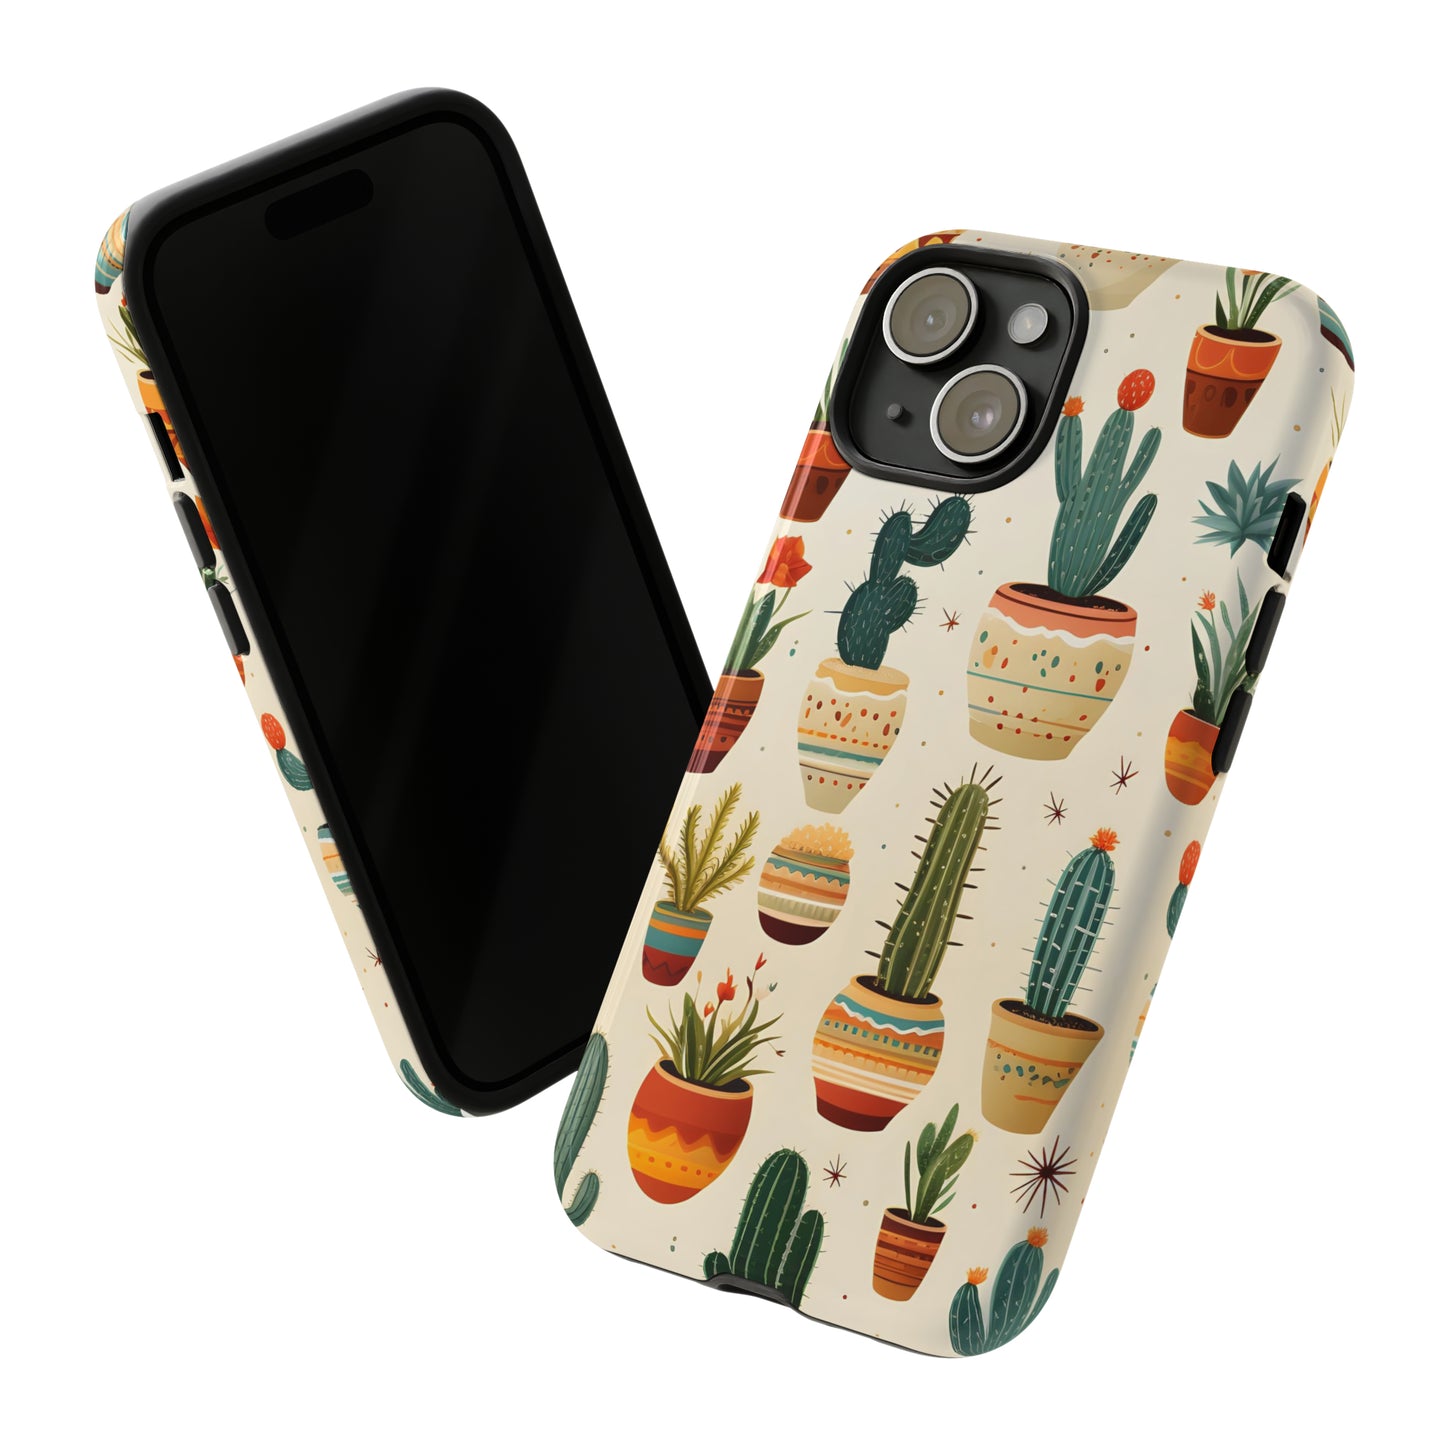 Cactus IPhone Durable Case, Phone Case, Phone Protector, Decorative IPhone Case, Cute Phone Case, Plant Lover Phone Case, Cactus Phone Case